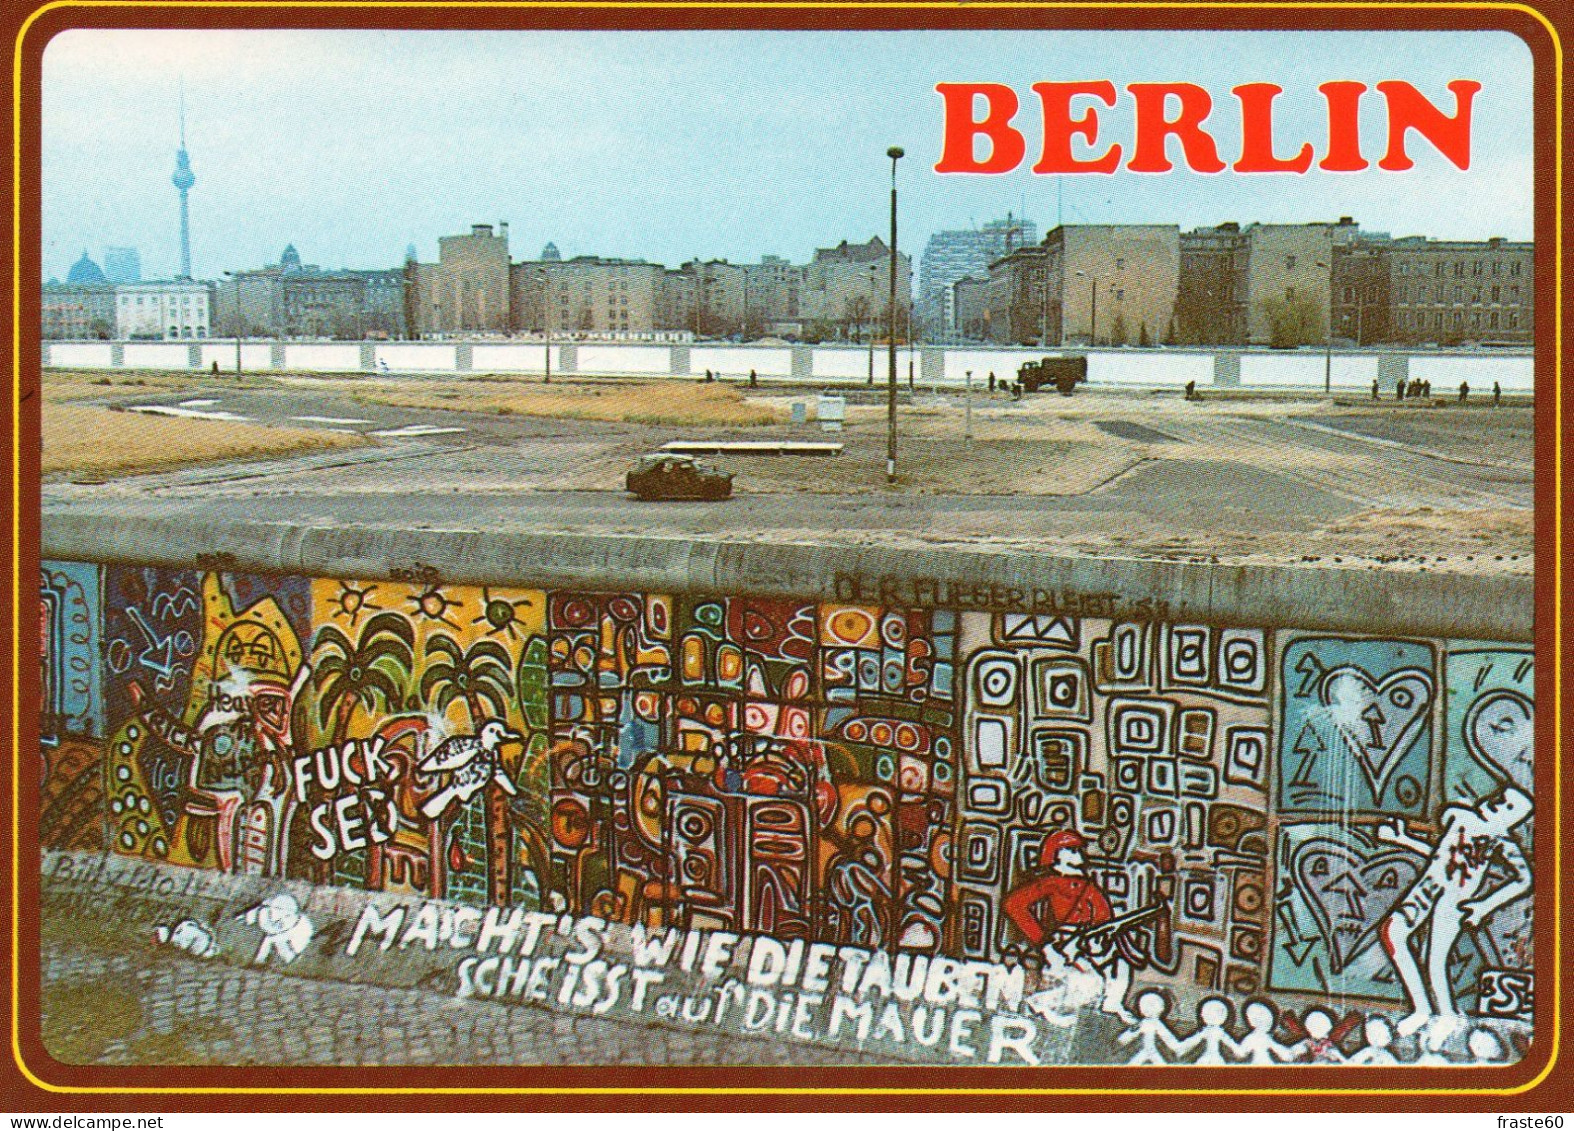 Berlin - Postdamer Platz - Berlin Wall